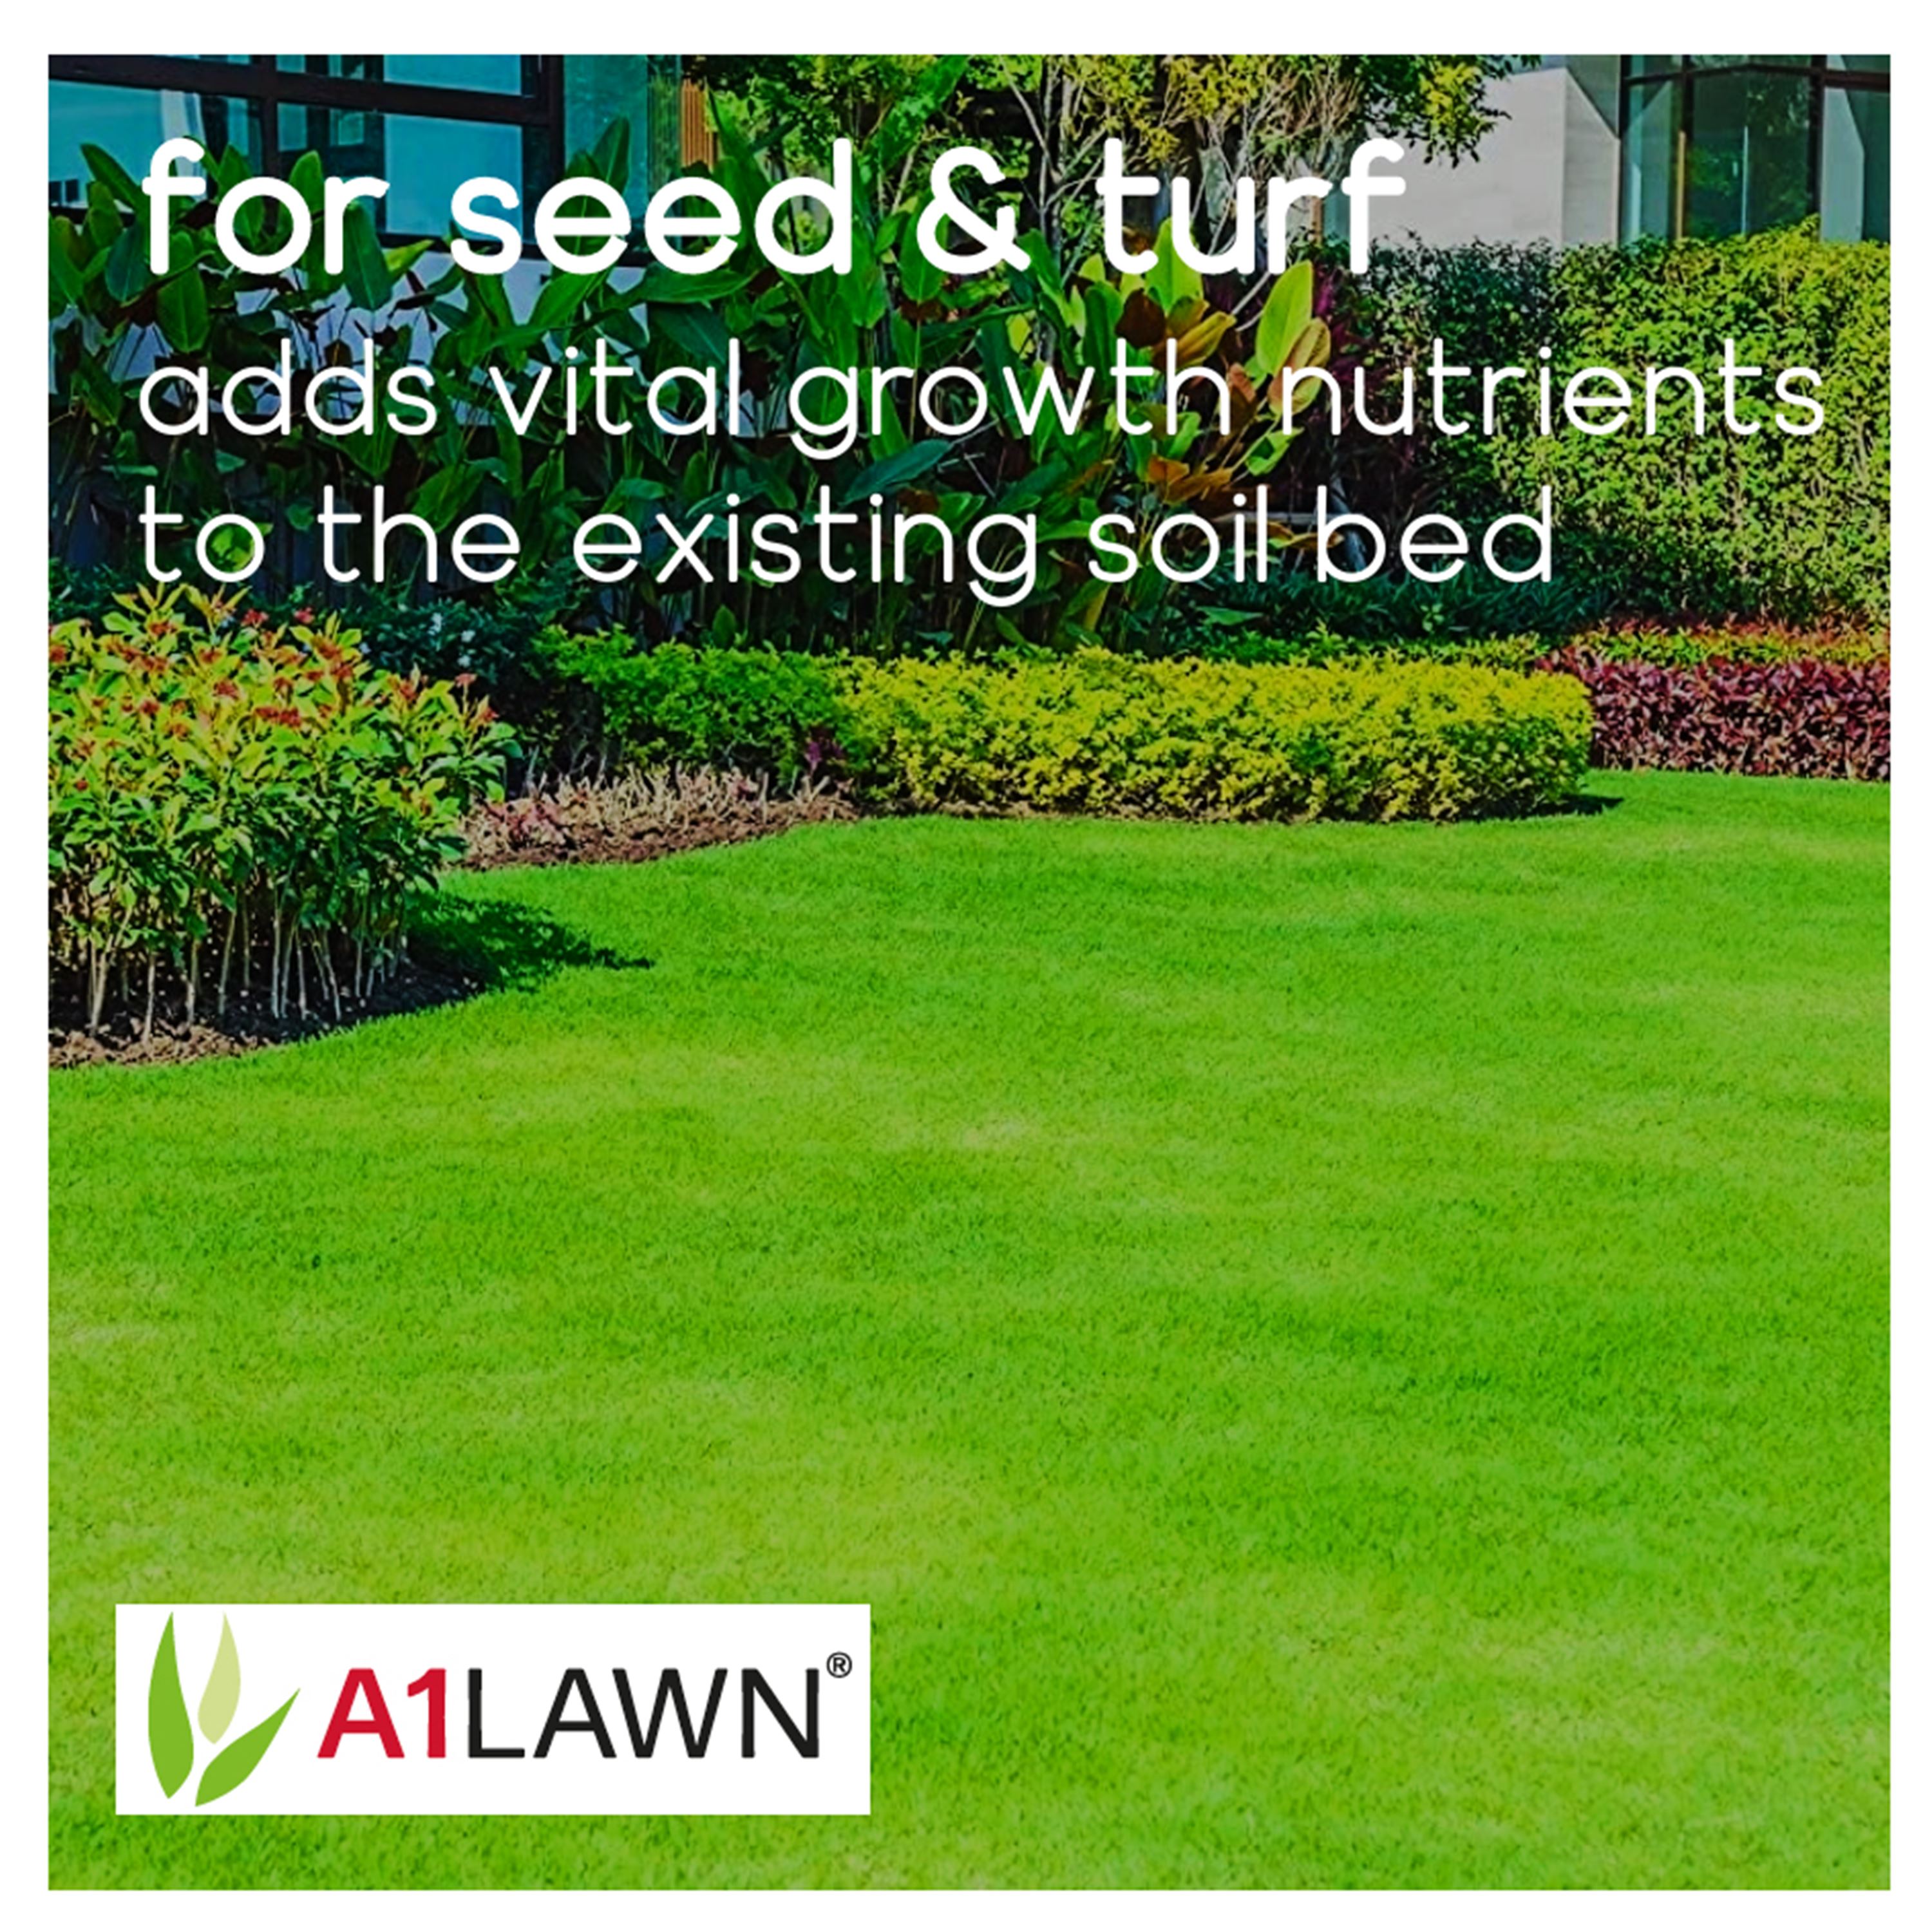 Multi-Save Pack A1Lawn 5Kg Am Pro-1 Finest Ornamental Grass Seed & 10Kg Pre-Seeder Fertiliser